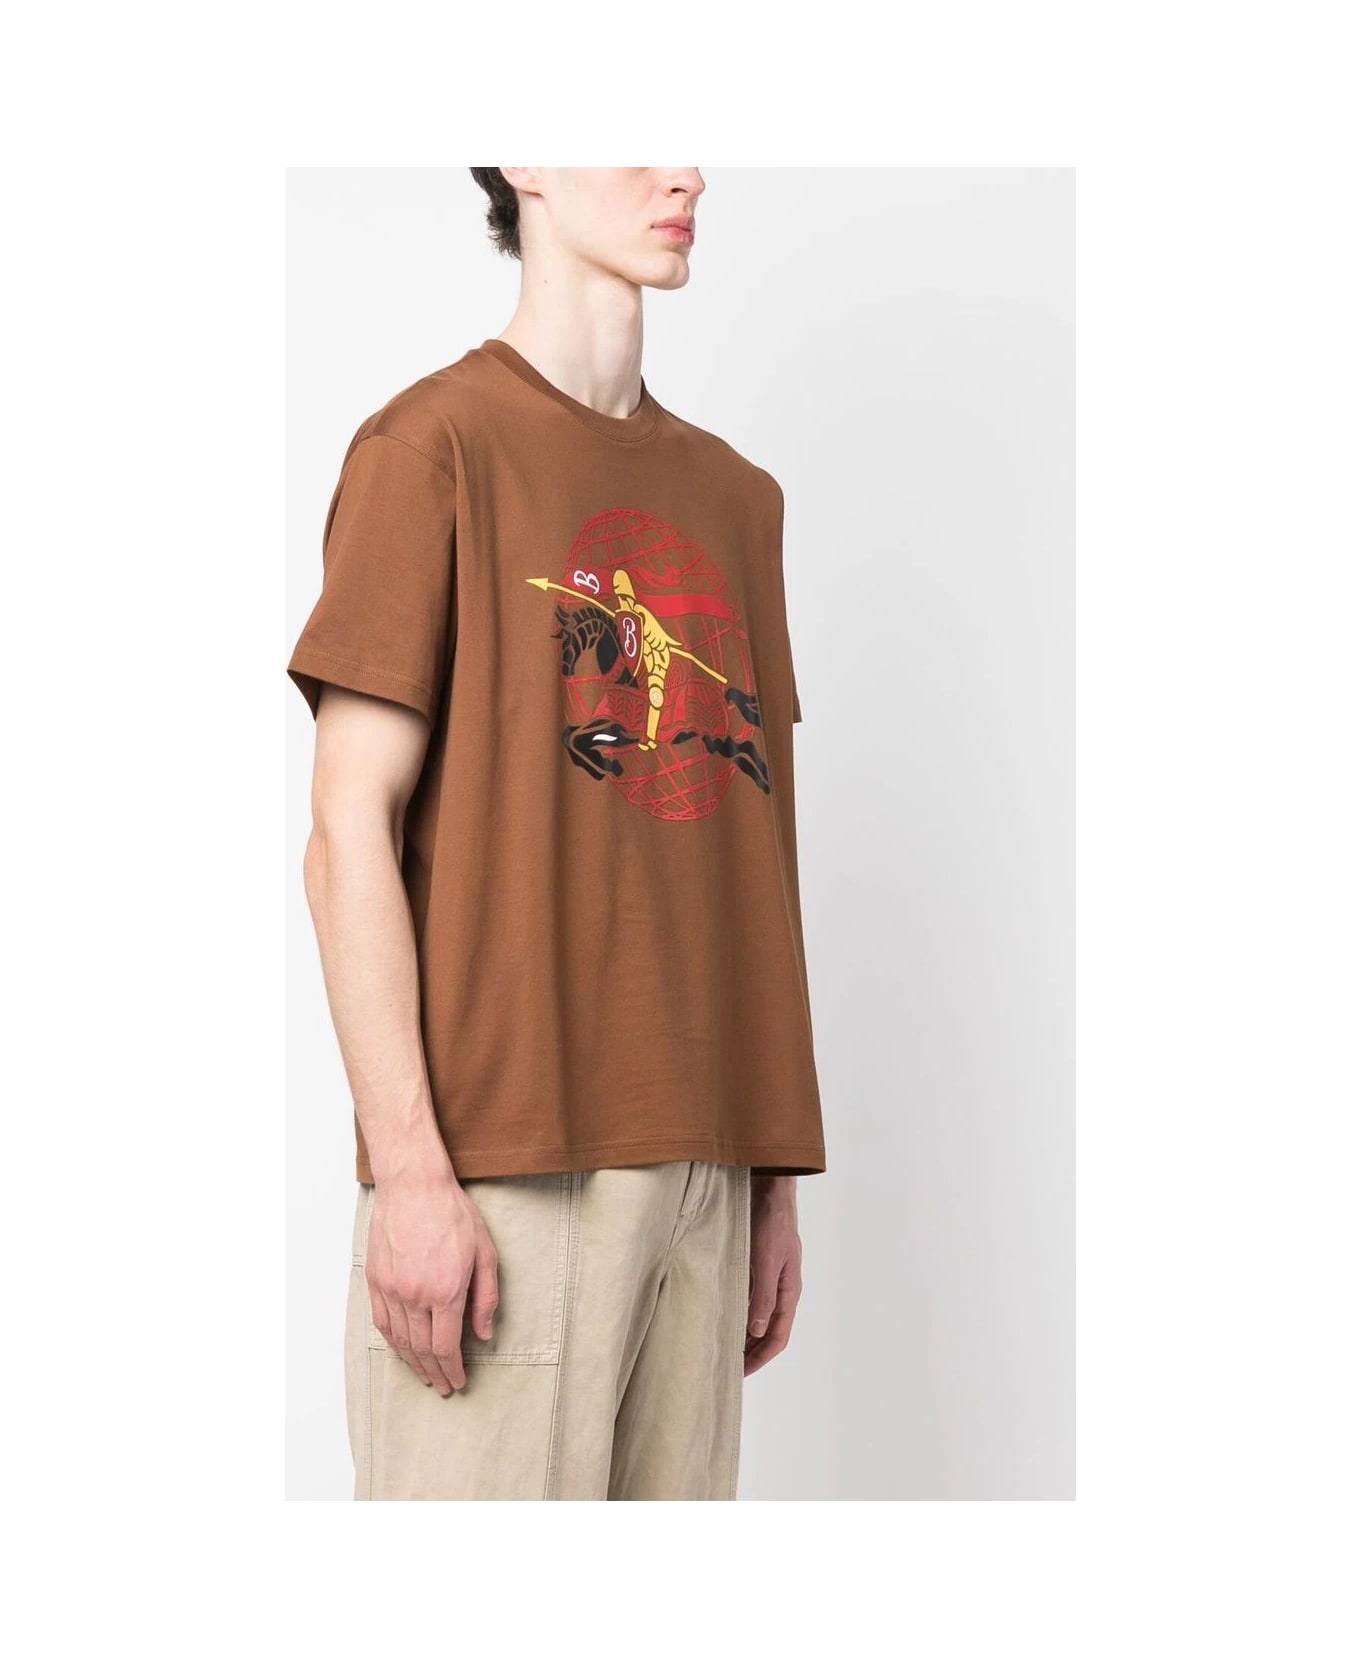 Burberry T-shirt - Brown